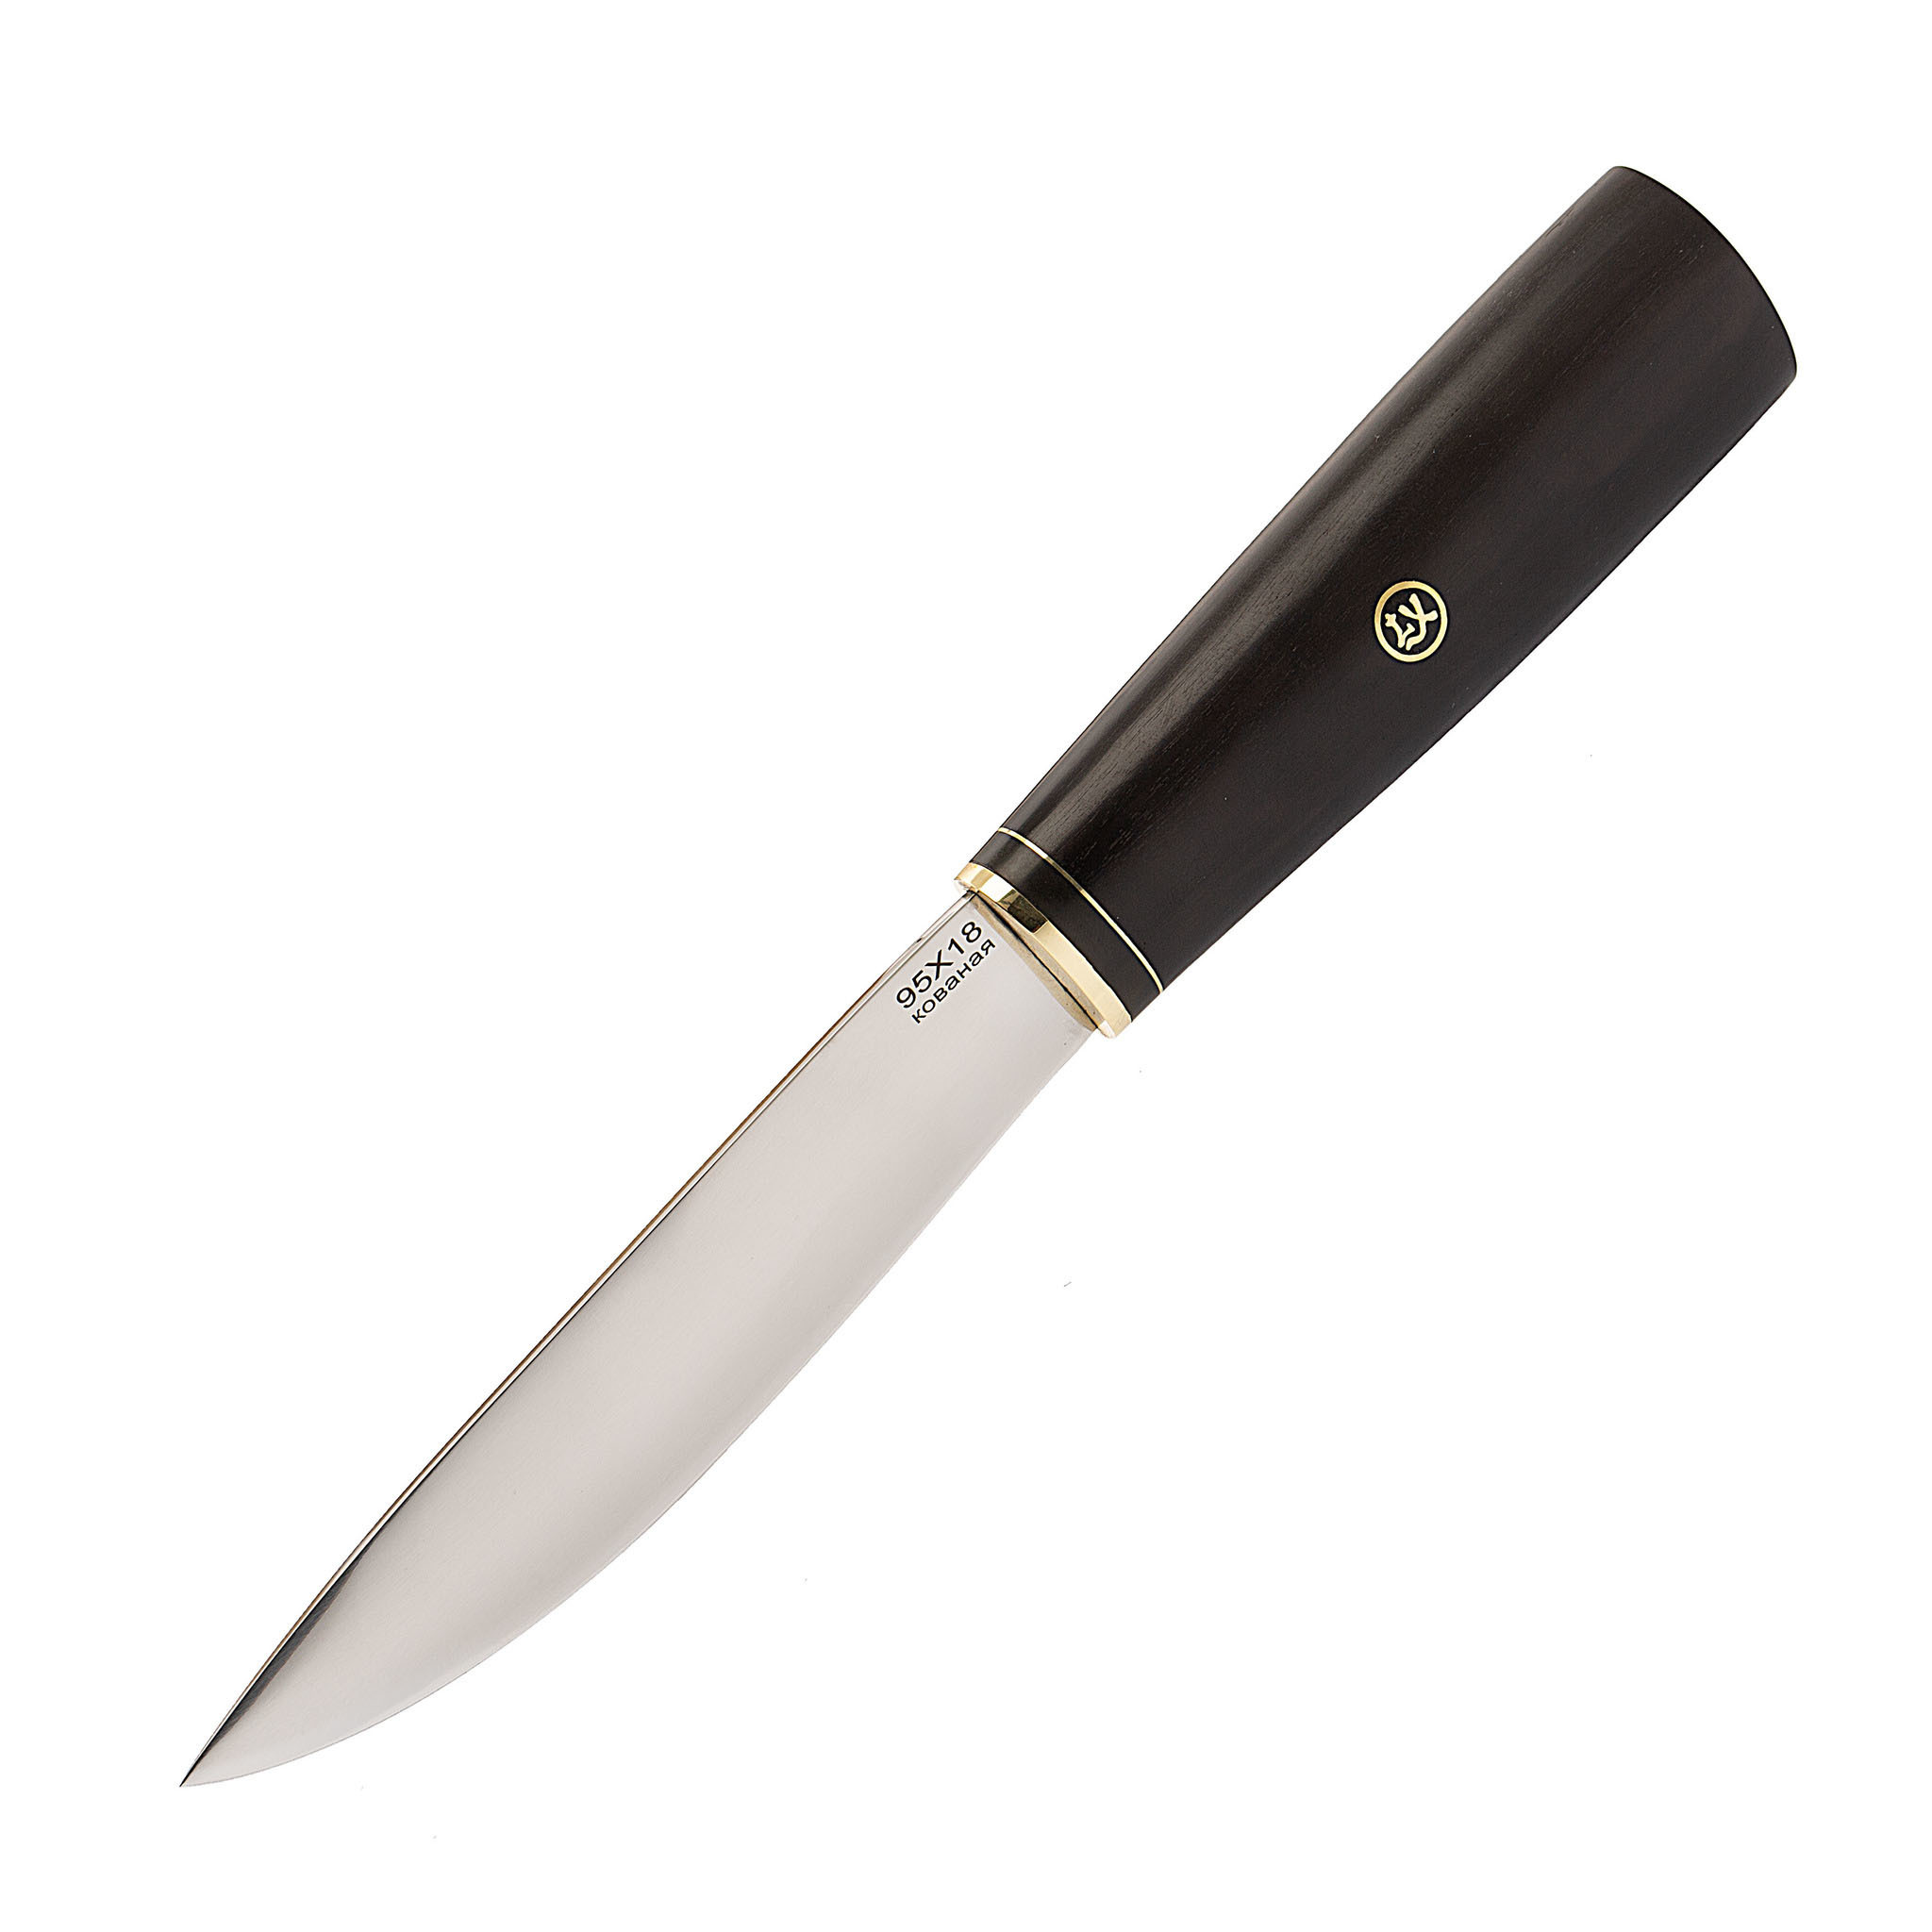 Нож Якутский, сталь 95х18, граб нож туристический аир засапожный 2 сталь 95х18 рукоять граб